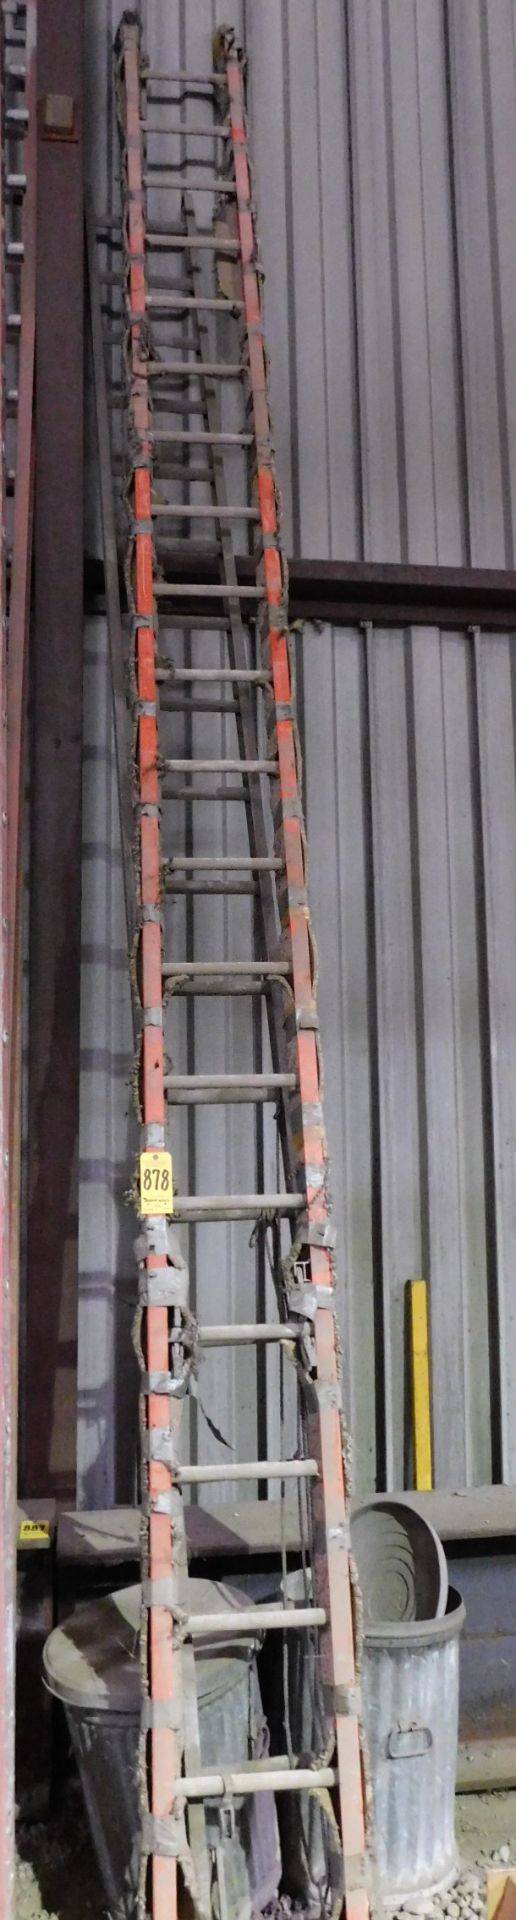 Extension Ladder Parts